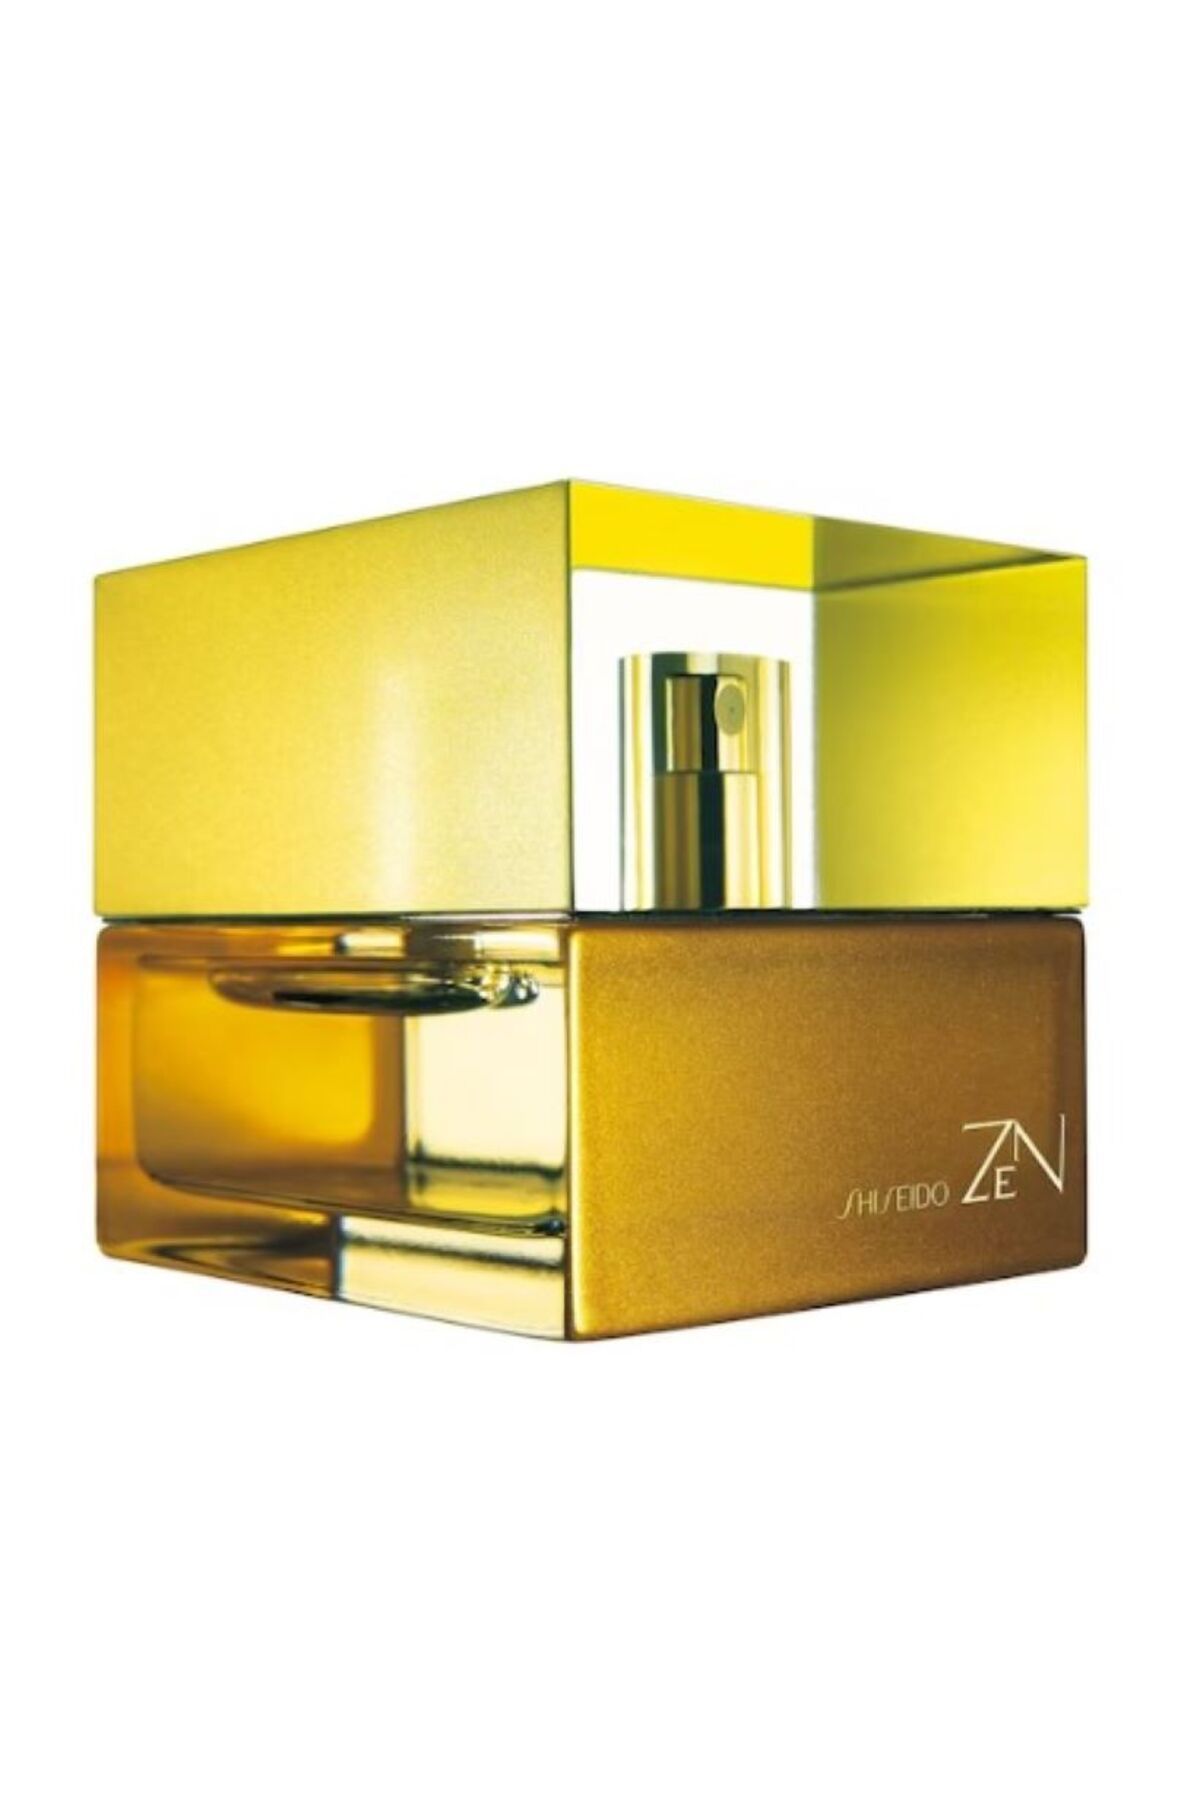 Shiseido Zen - Eau de Parfum -  85417022032012